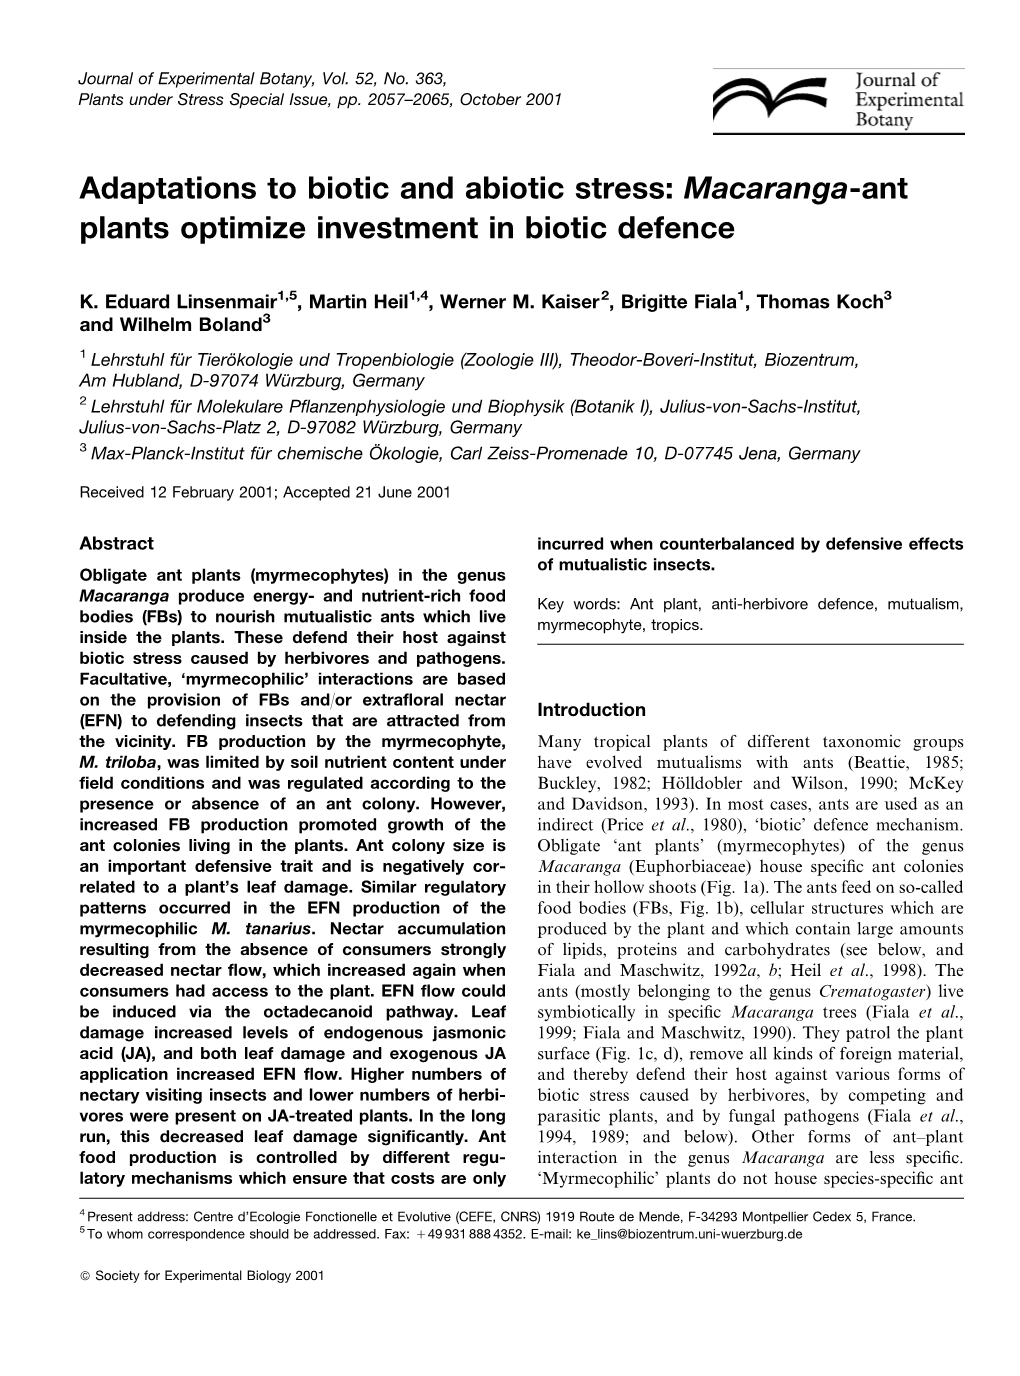 Macaranga-Ant Plants Optimize Investment in Biotic Defence